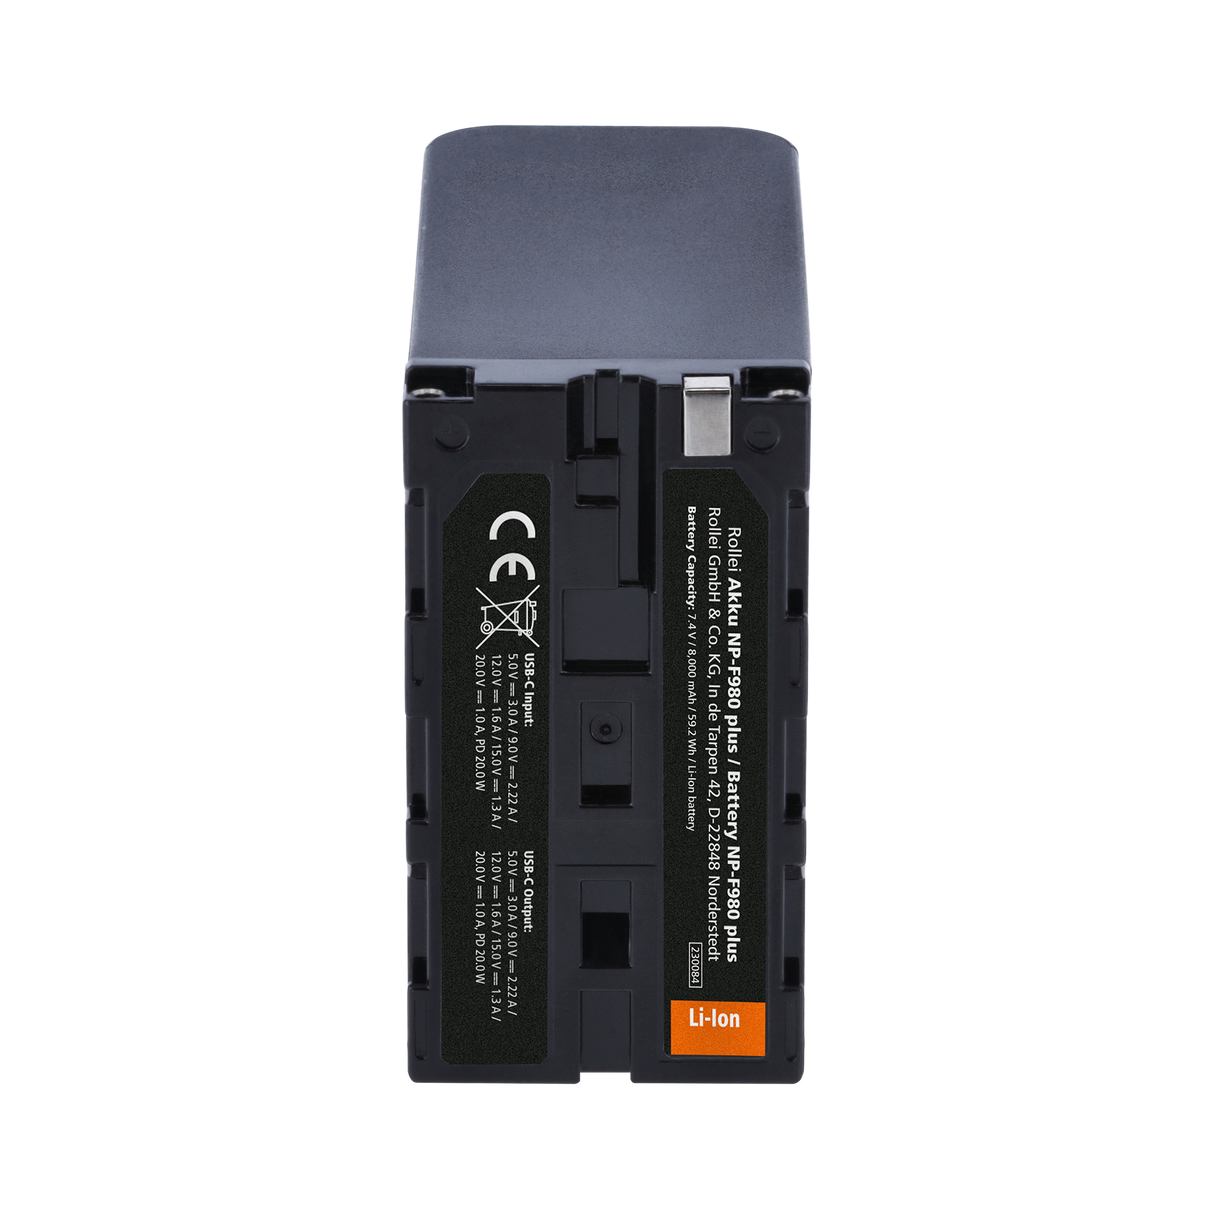 Bundle 2x battery NP-F980 plus incl. charger